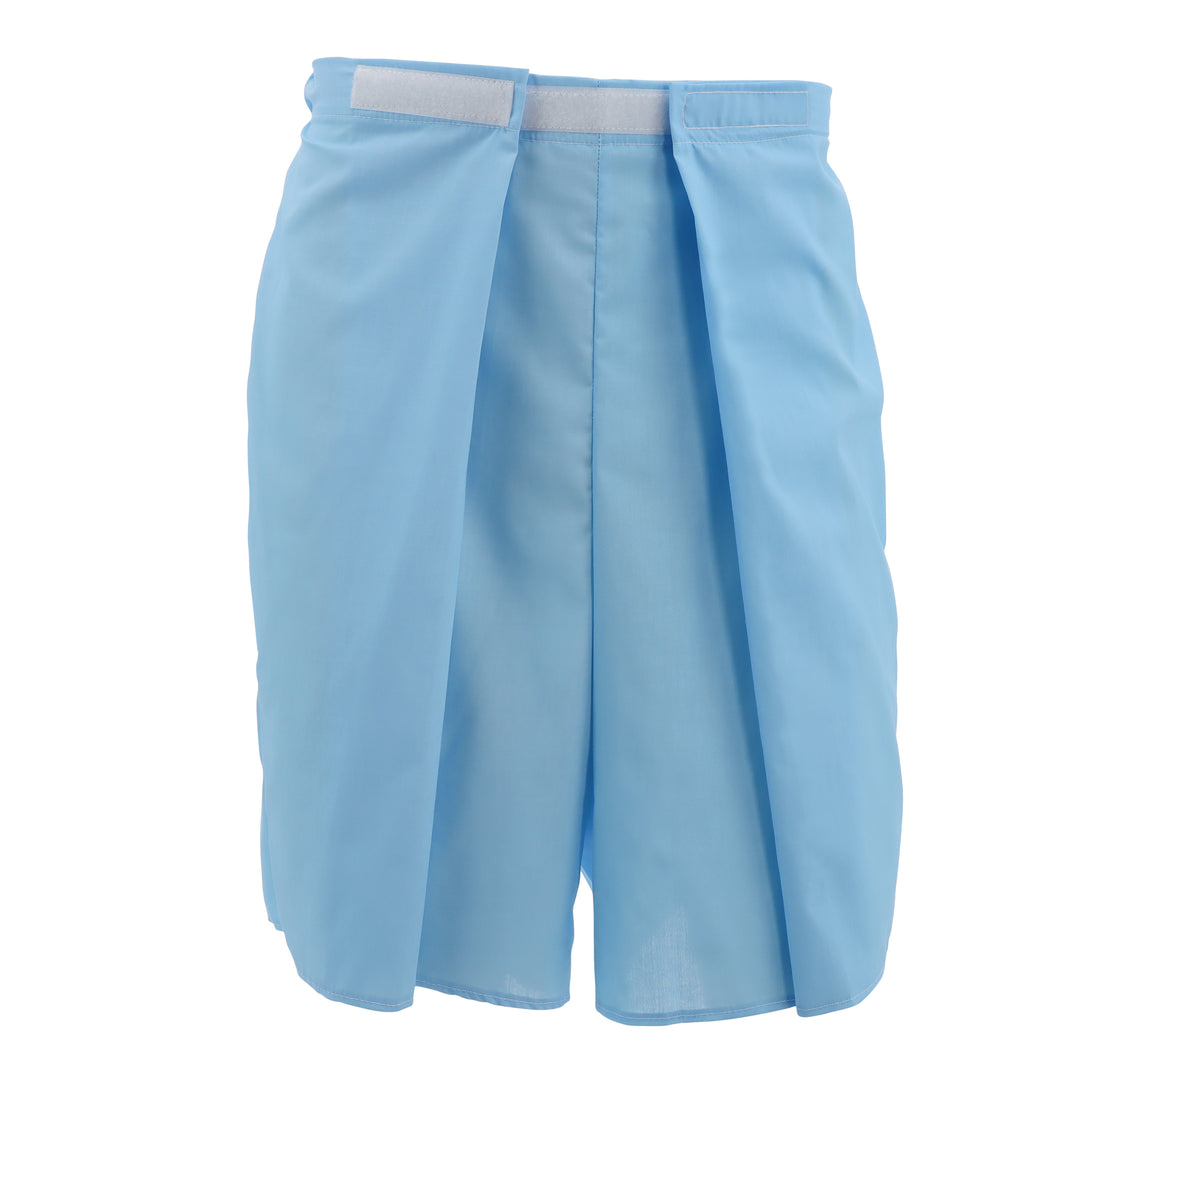 Arise Comfort Shorts V2 - Spell Blue - ShopperBoard